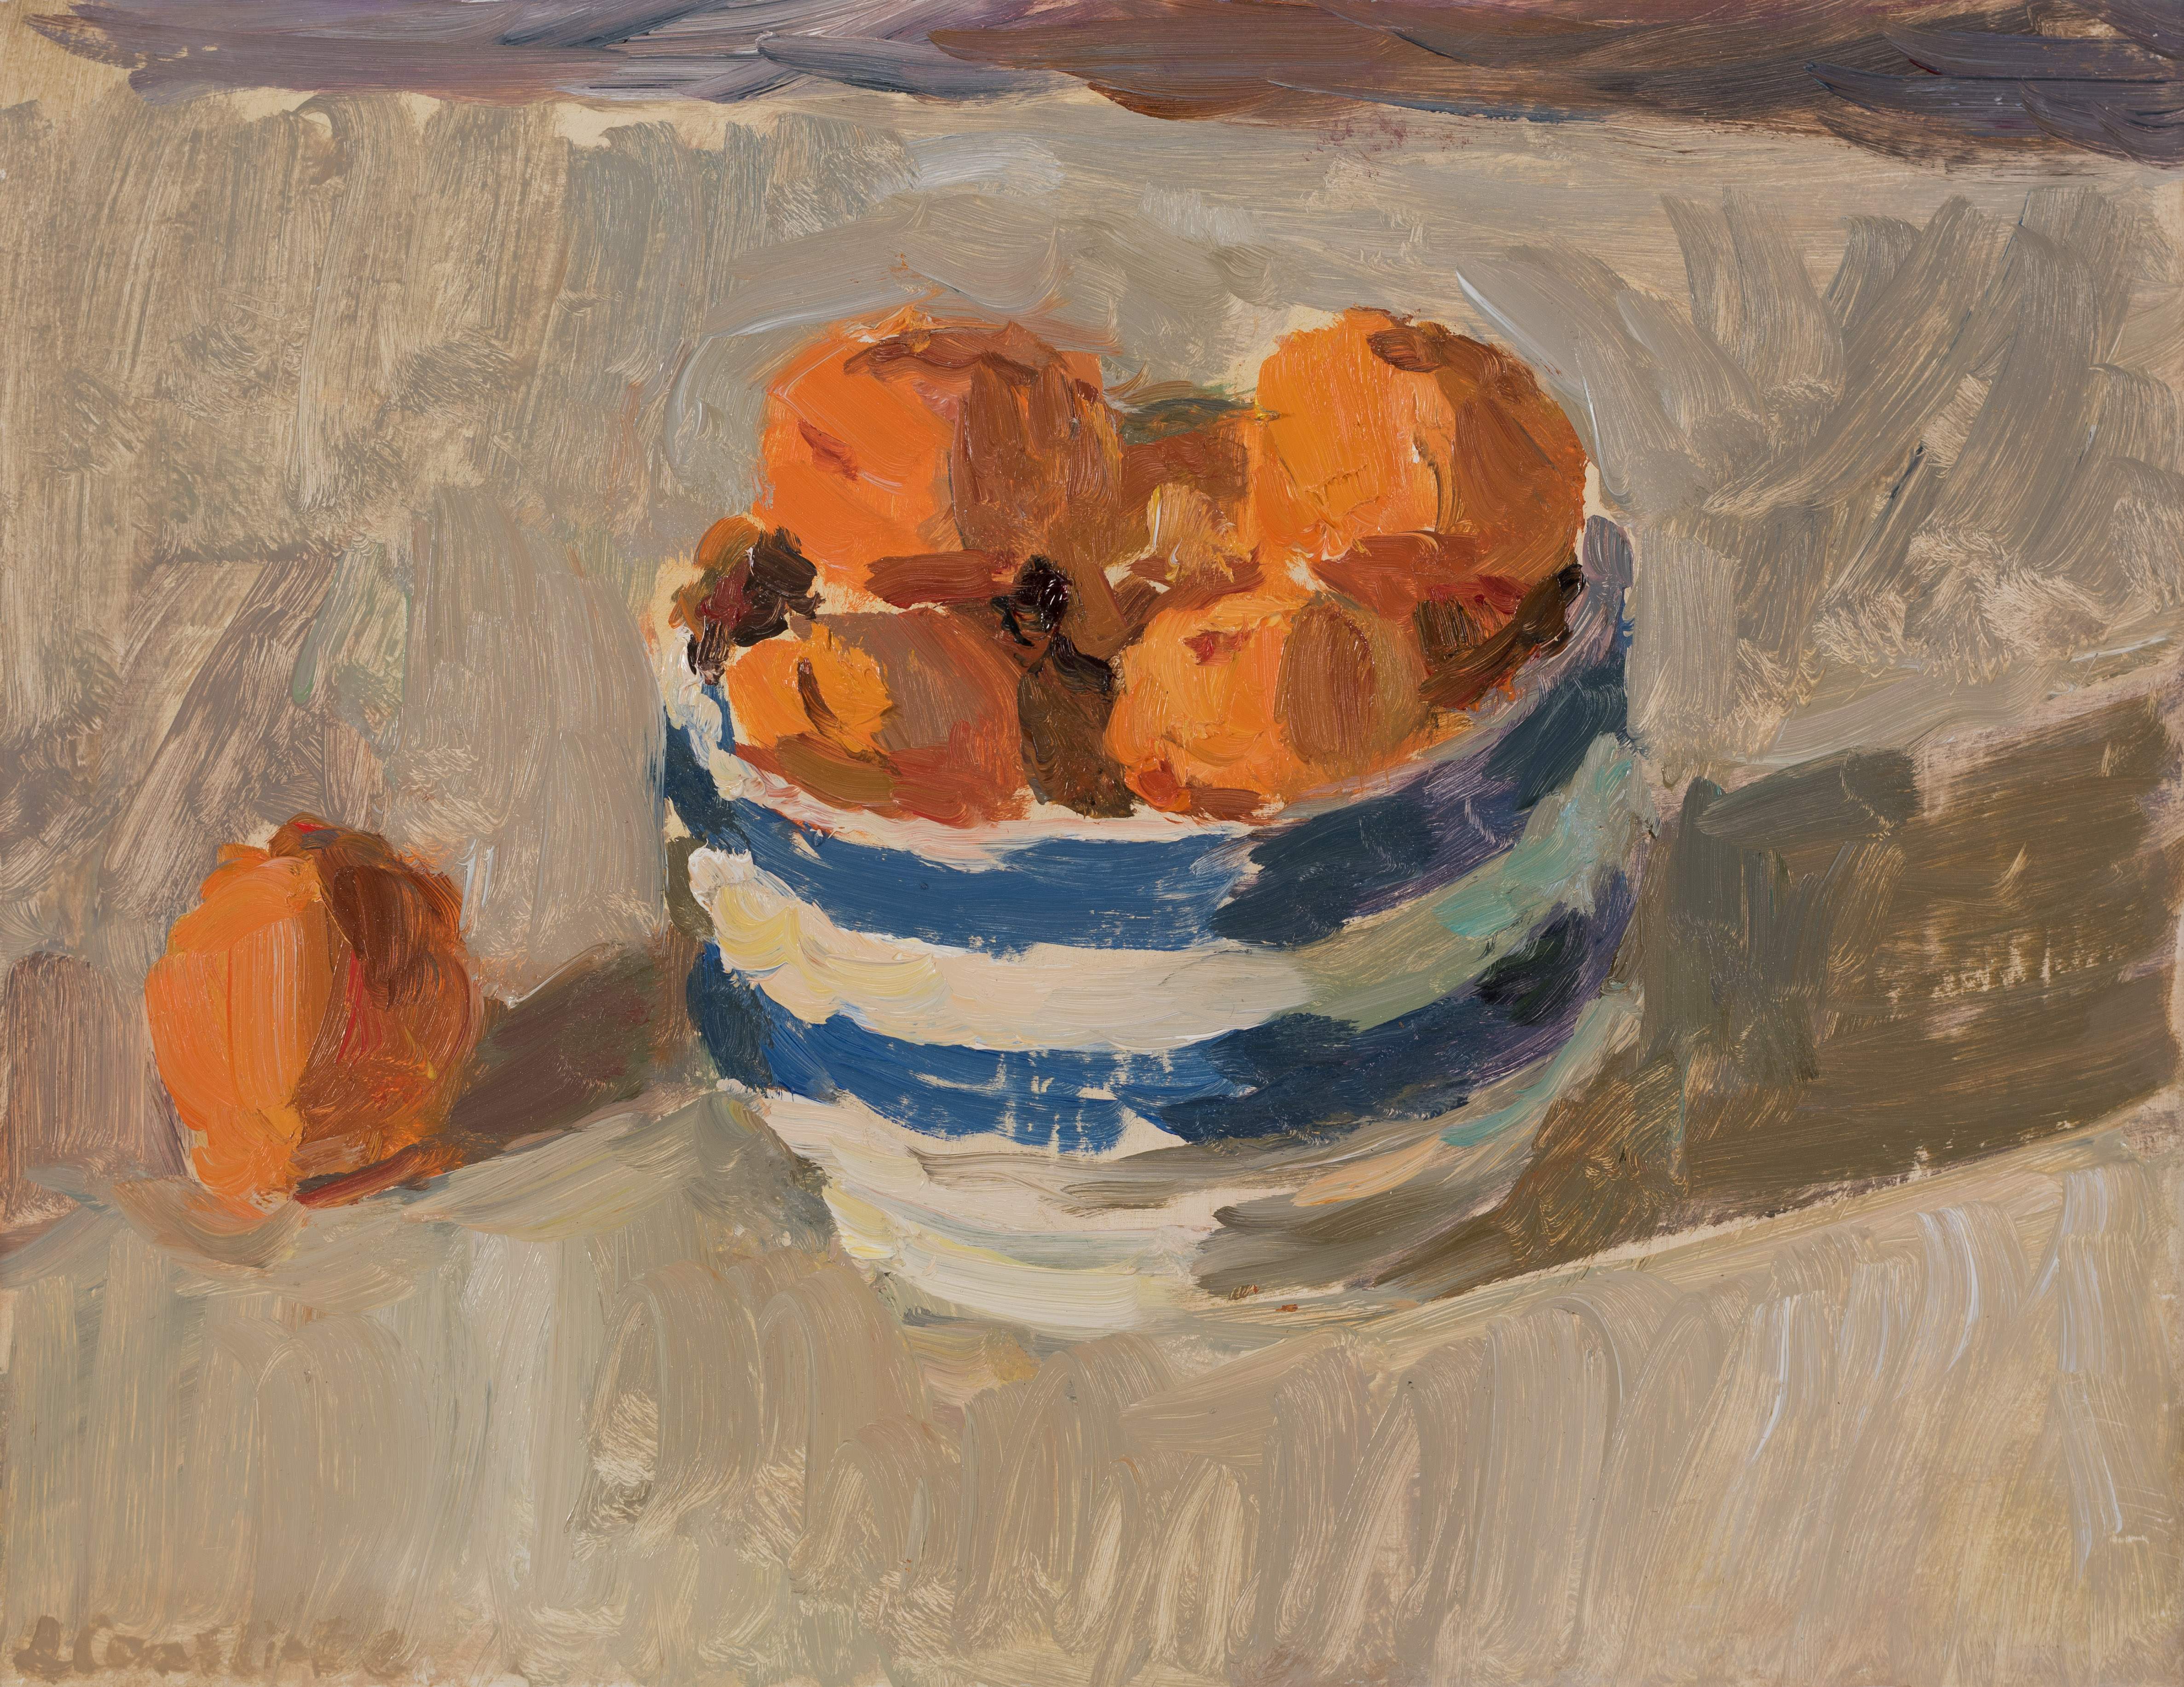 Digital Print: Apricots in a Striped Bowl